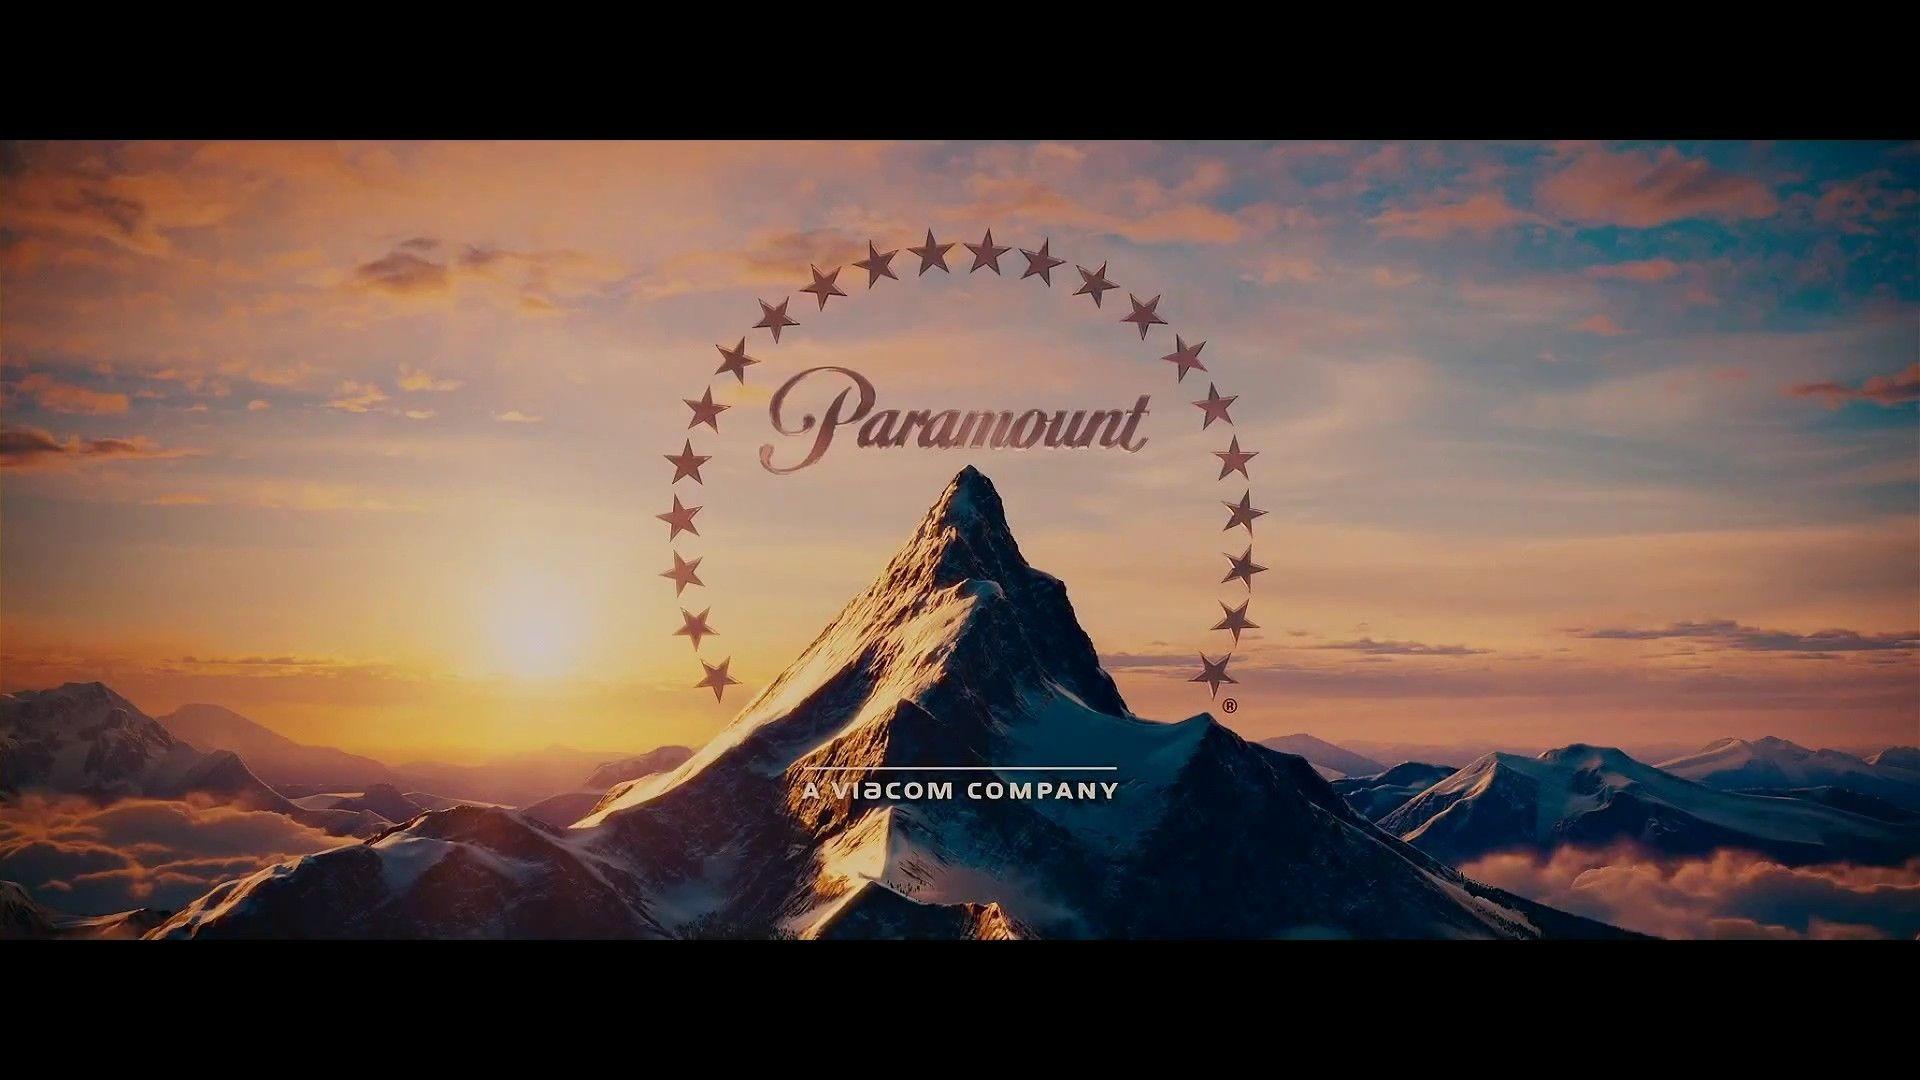 Simply: Iron Man Iron Man 3 Marvel Paramount Paramount